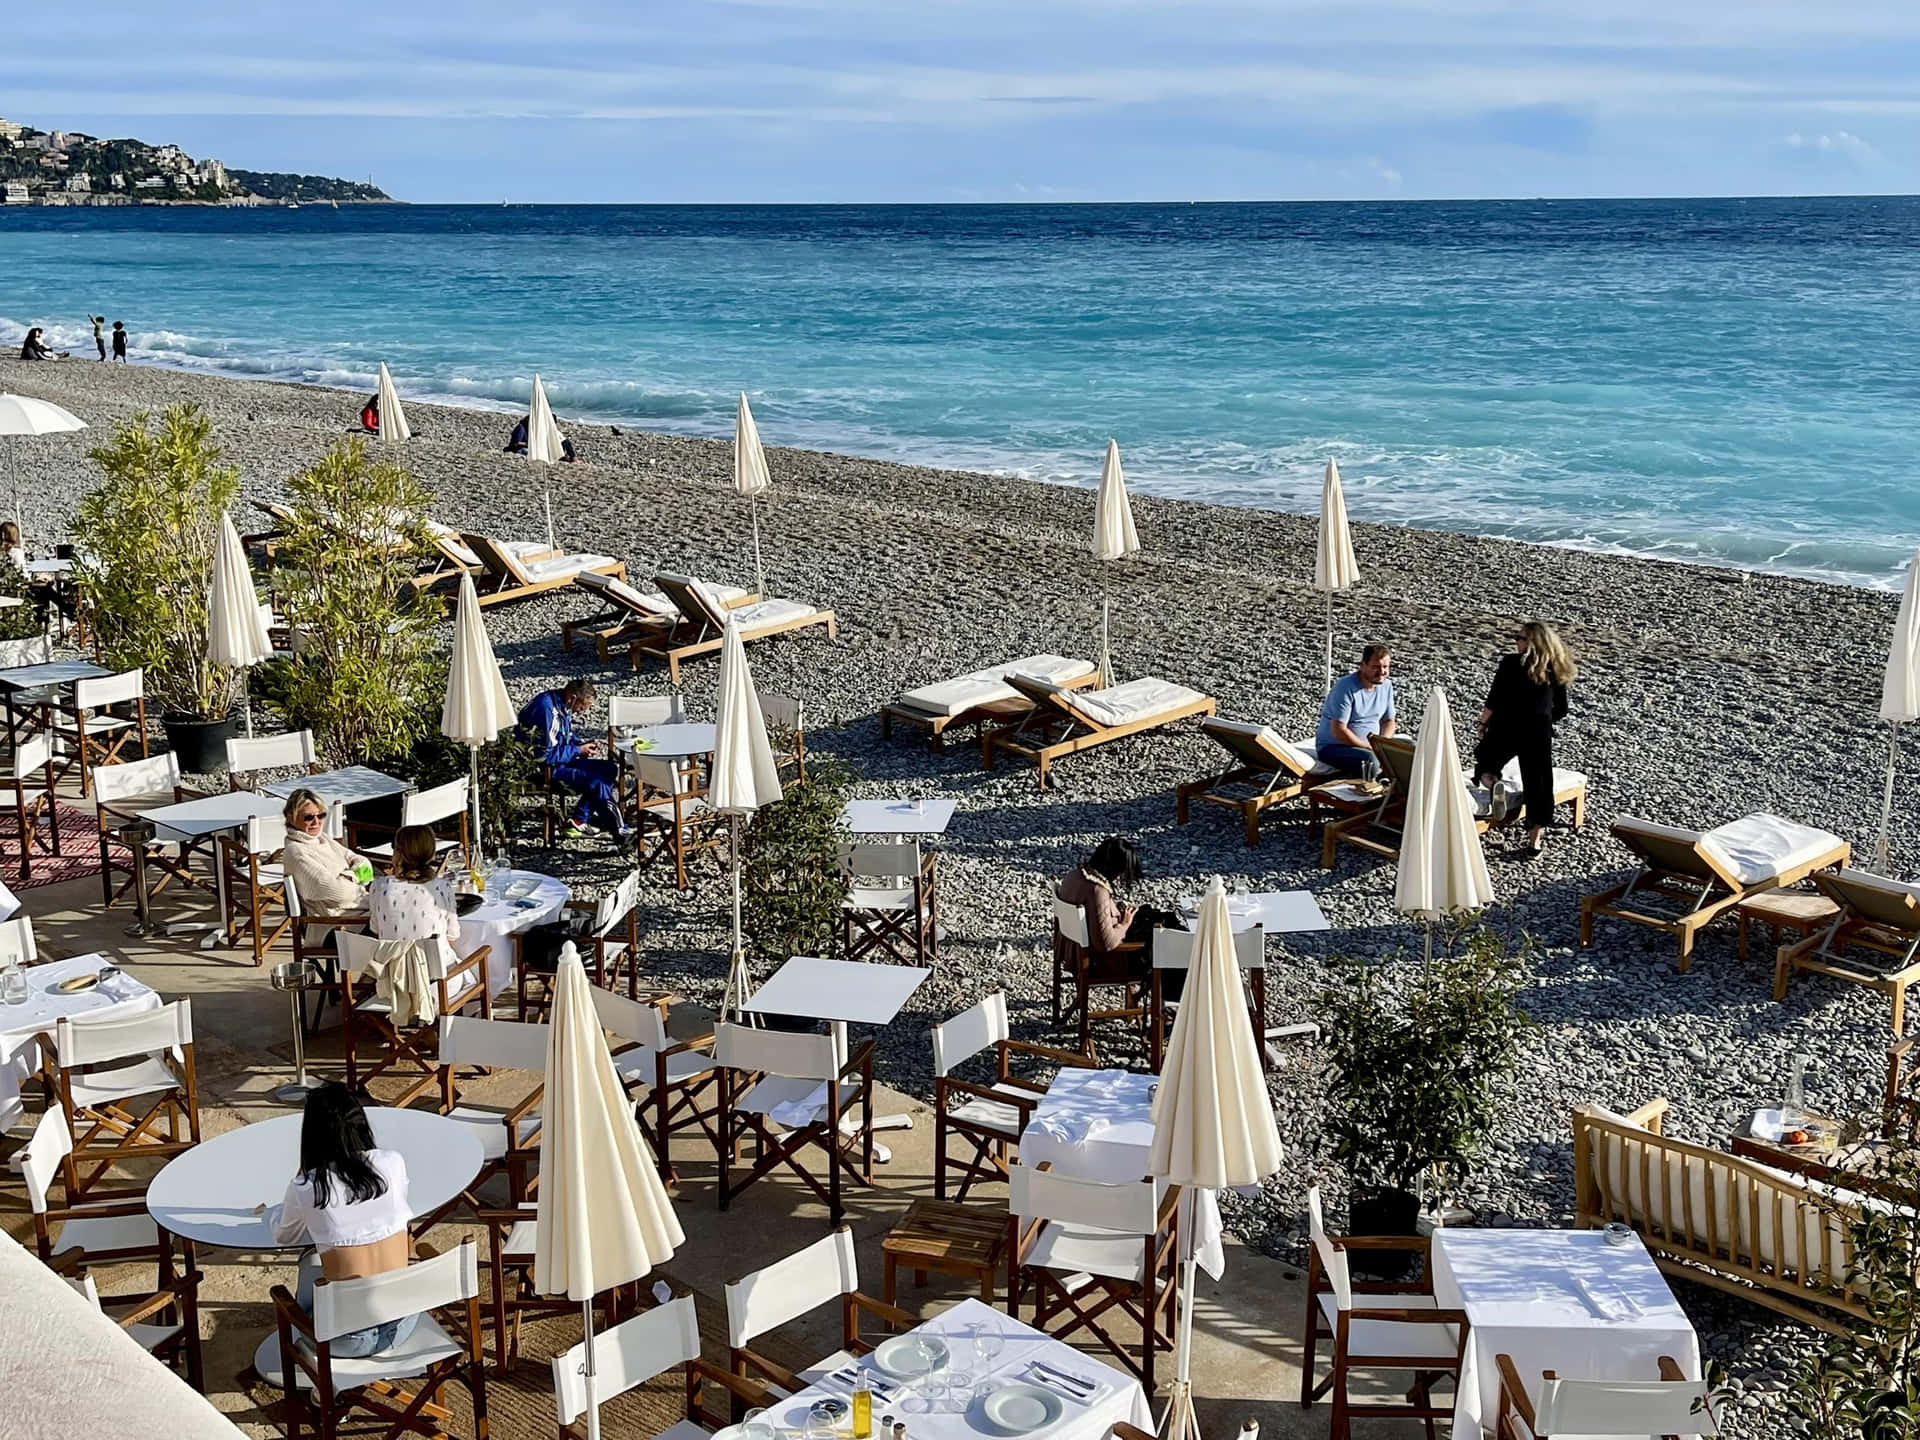 Enjoying the Mediterranean Sea in Nice, France